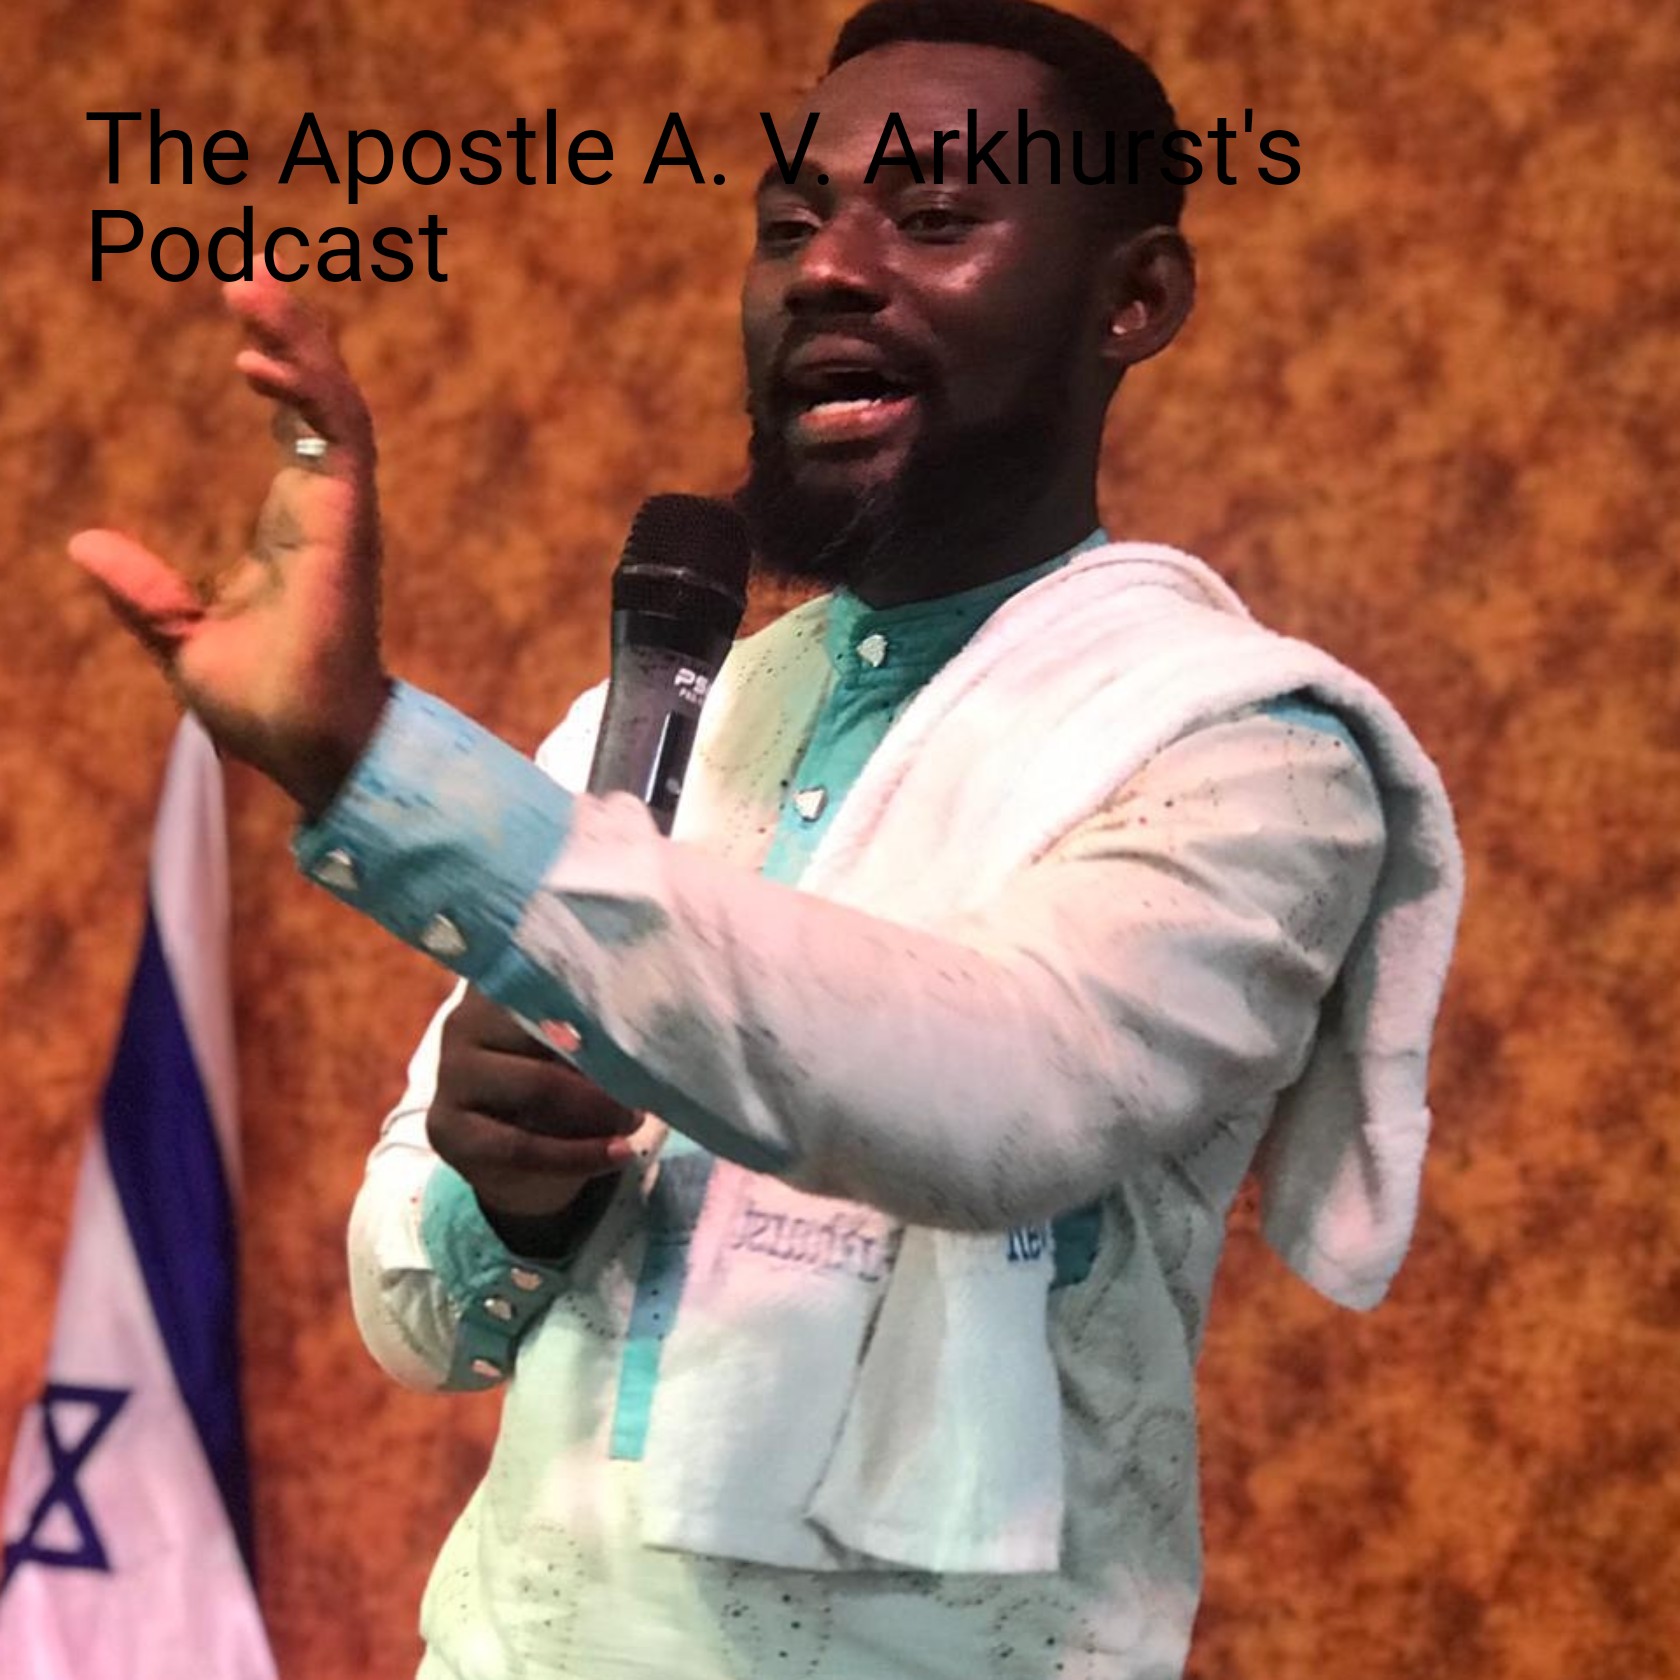 The Apostle A. V. Arkhurst's Podcast